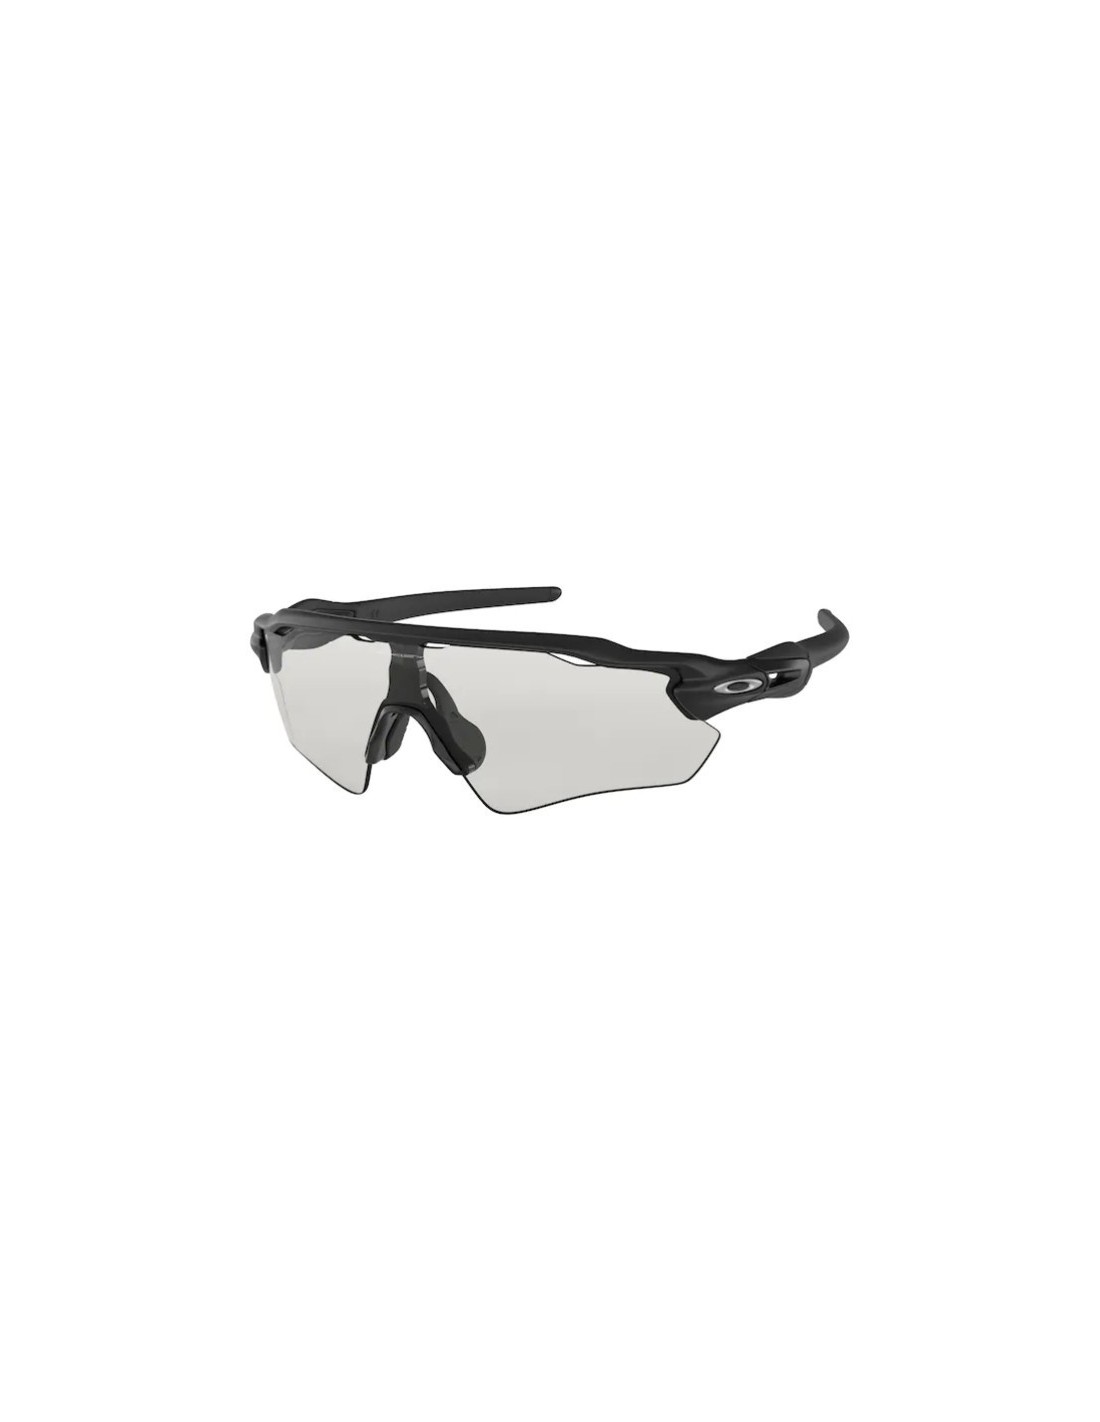 Sunglasses OAKLEY RADAR EV PATH 9208-74 Matte Black Clear 113,...